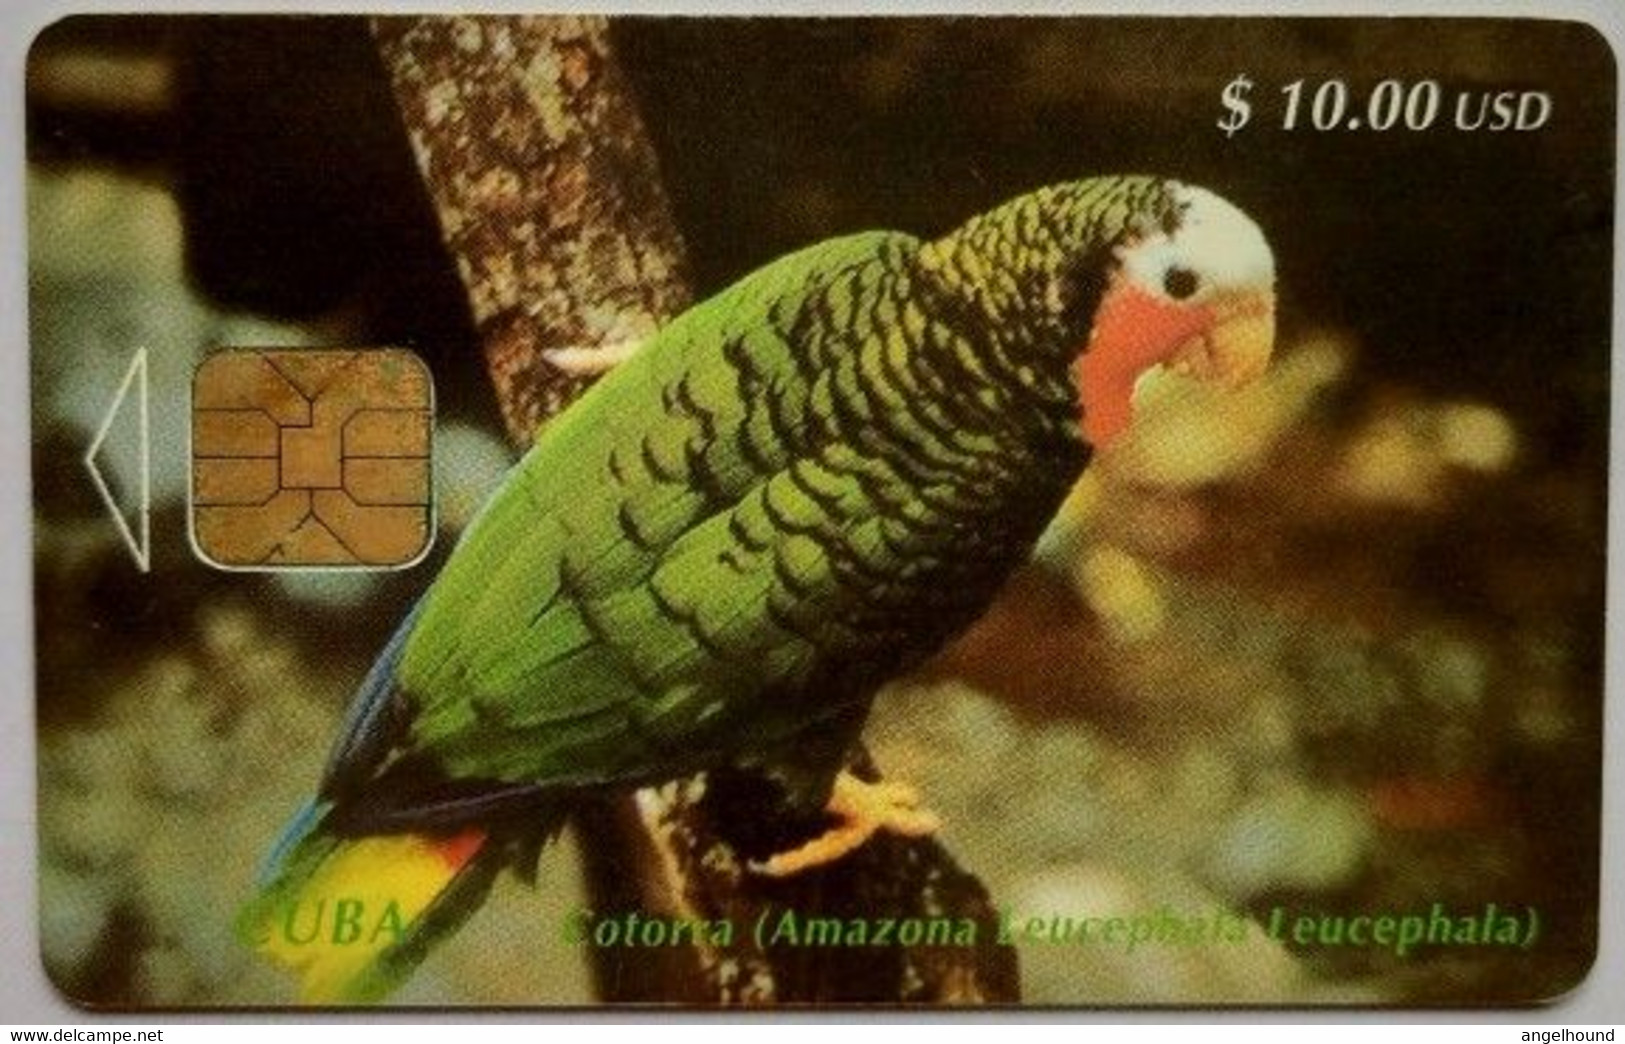 Cuba $10.00 USD " Cotorra - Cuban Parrot ( Amazona Leucocephala  ( 1st Edition ) " - Cuba